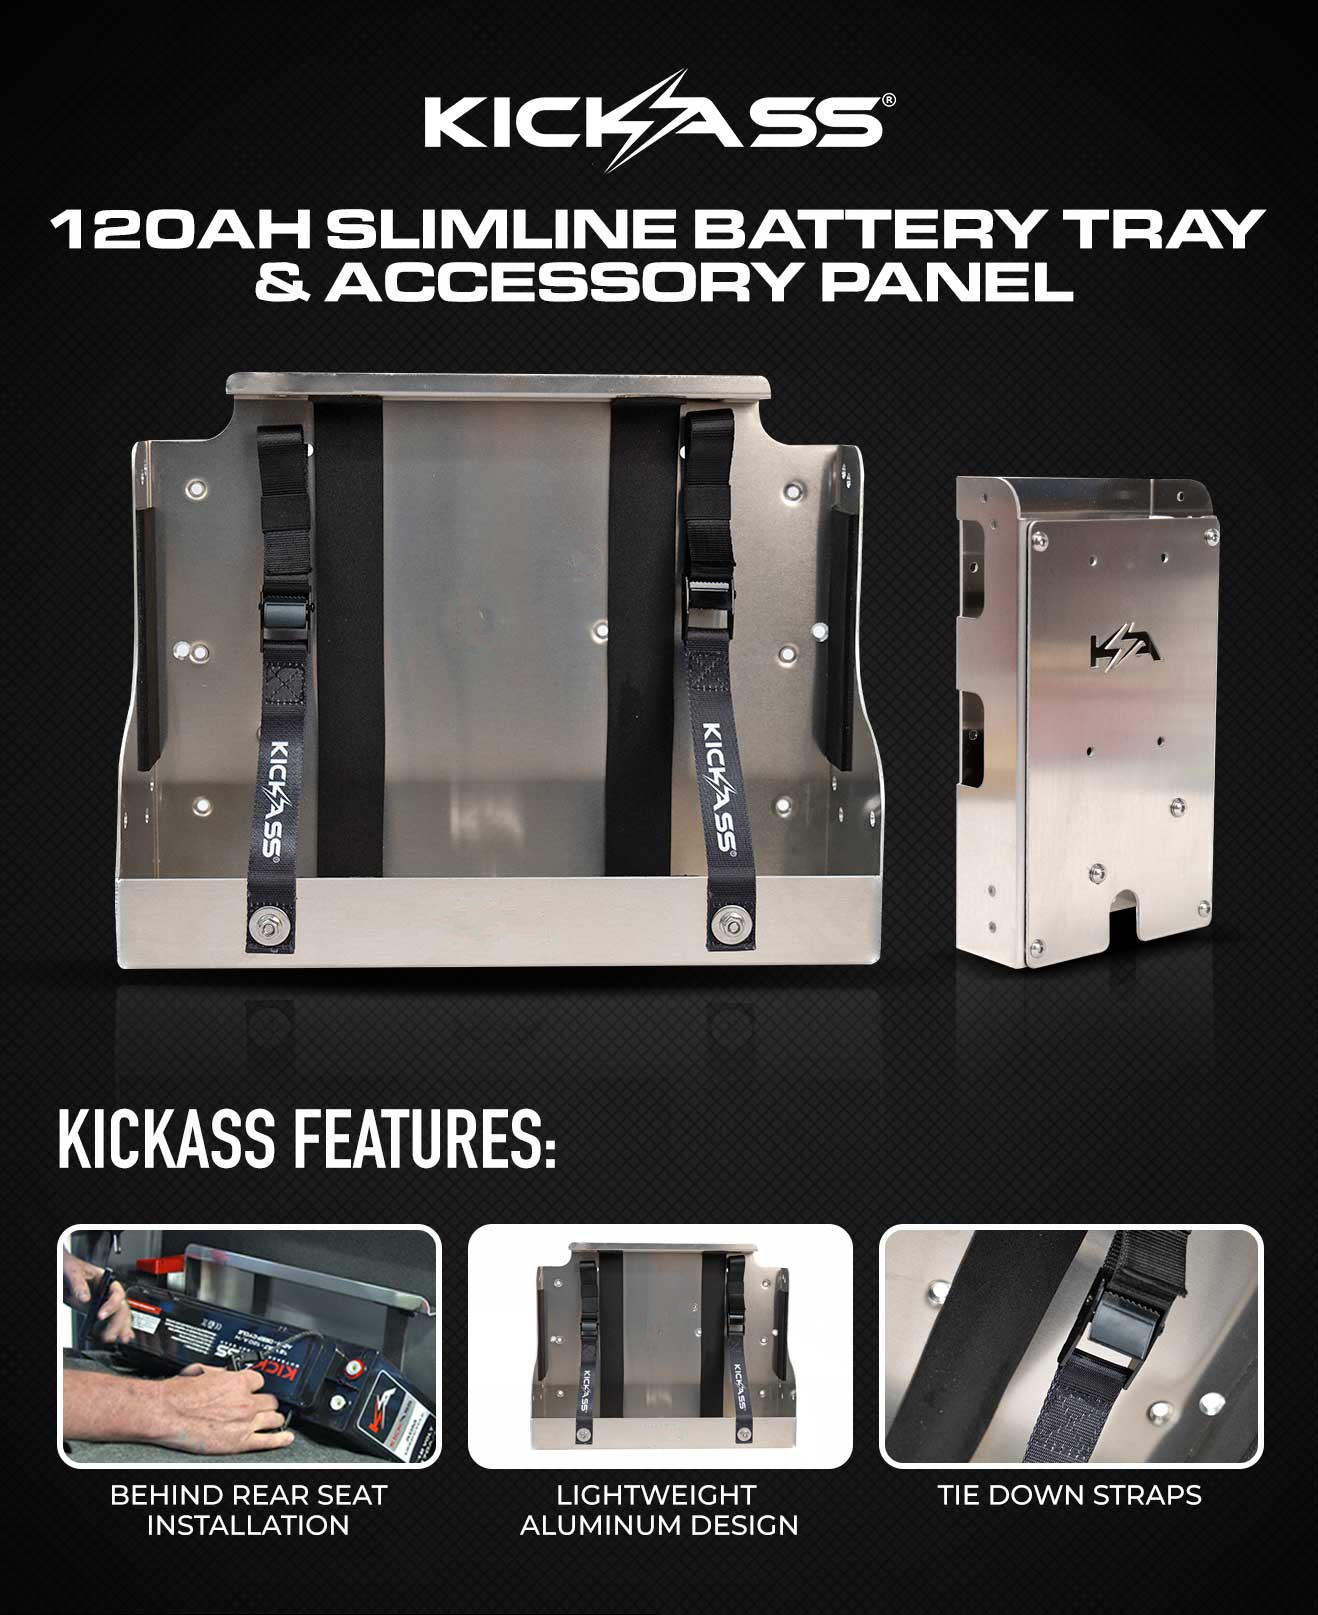 KickAss 170AH Slim Battery Tray